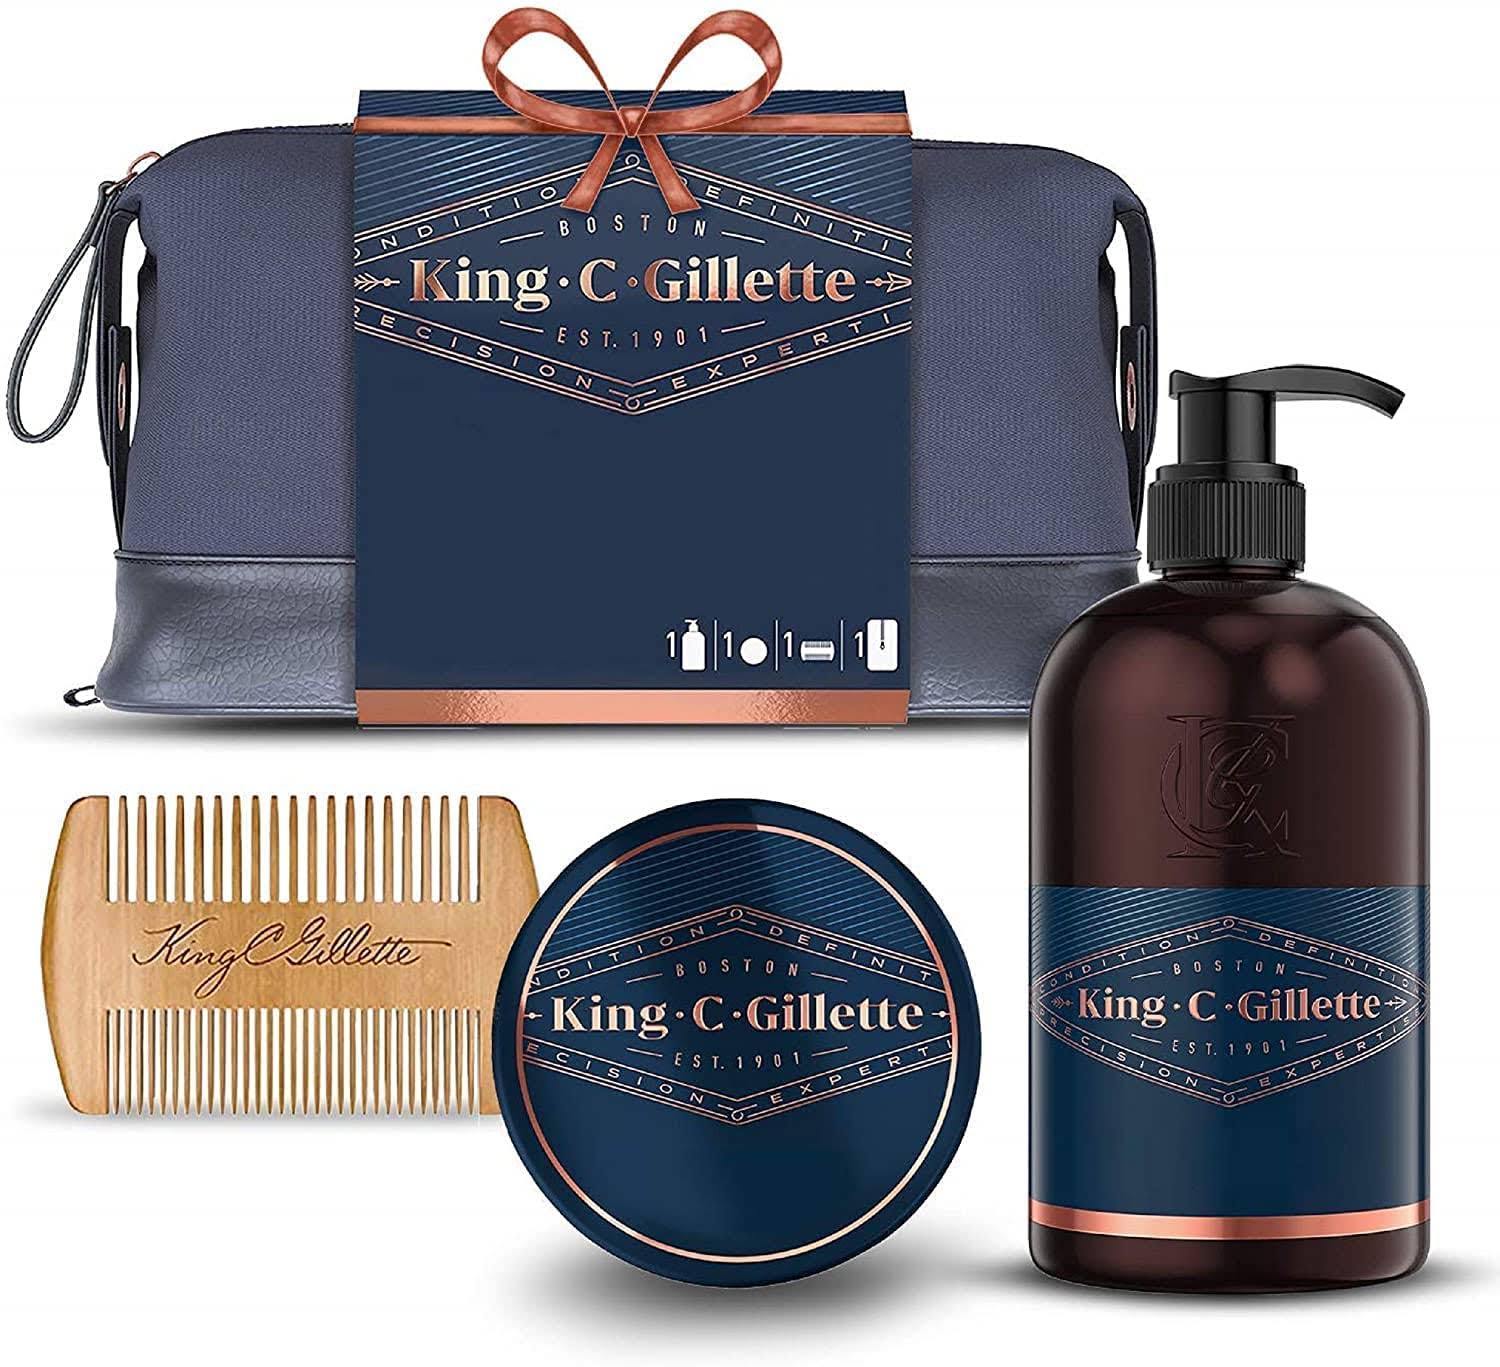 King C. Gillette Beard Grooming Kit for Men, Beard & Face Wash + Beard Balm + Comb, Gift Set Ideas for Him/Dad